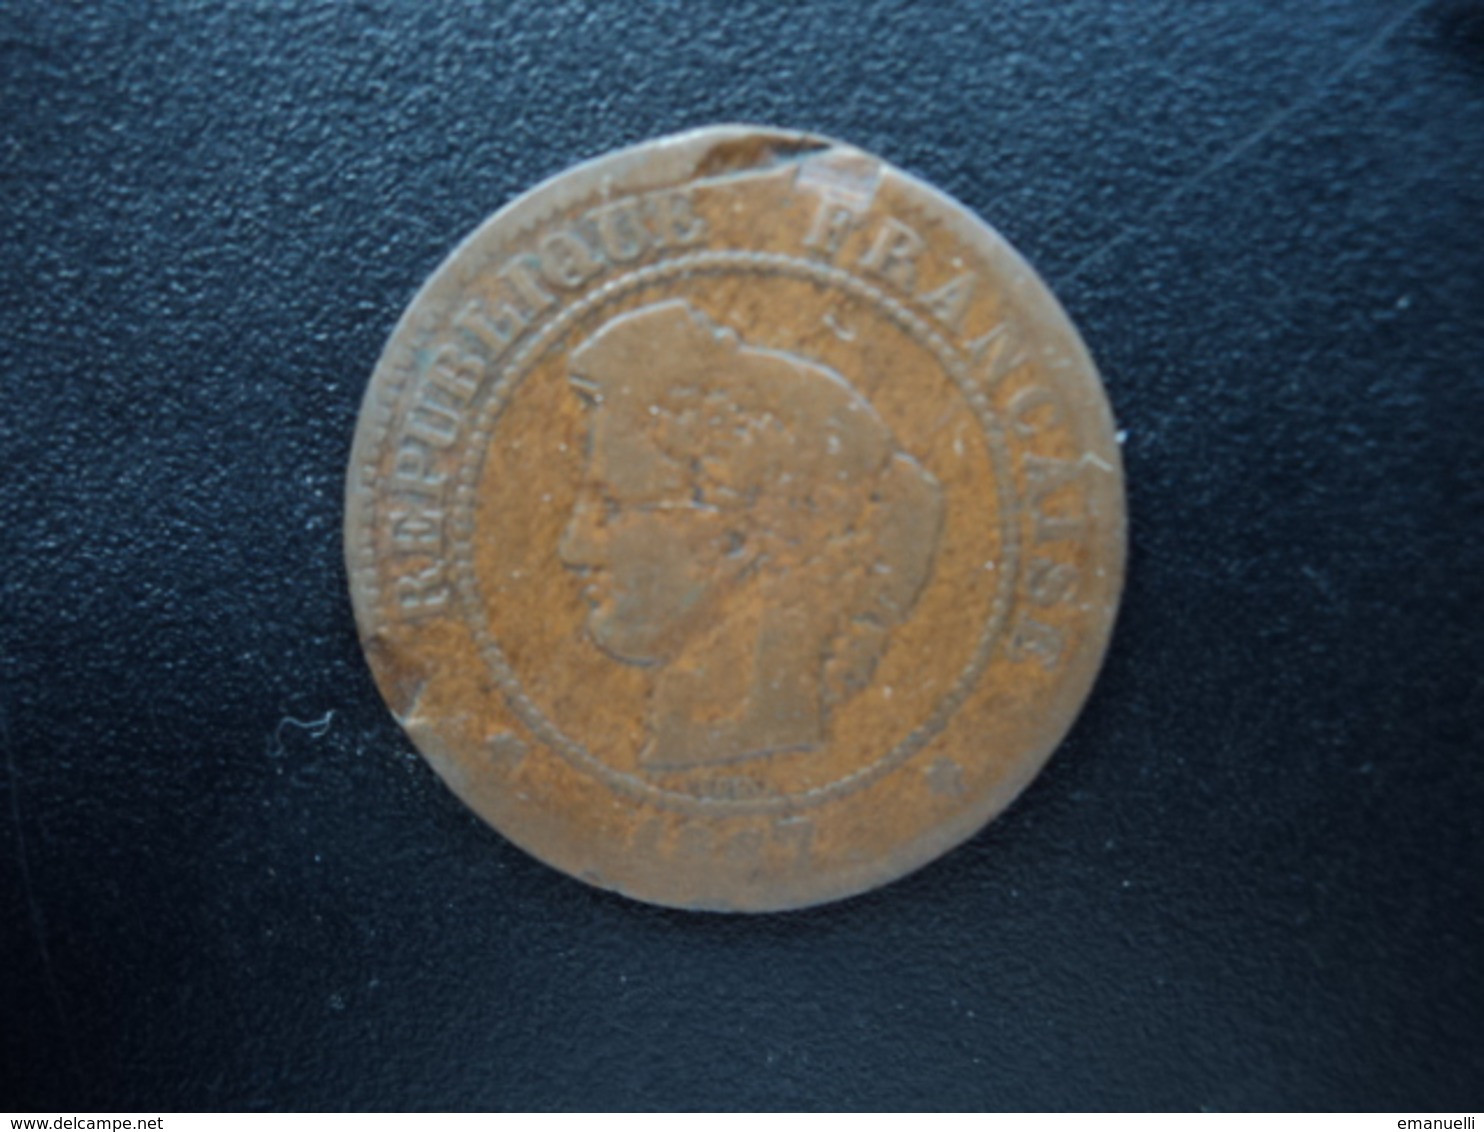 FRANCE : 5 CENTIMES  1887 A    F.118 / G.157a / KM 821.1      B - 5 Centimes